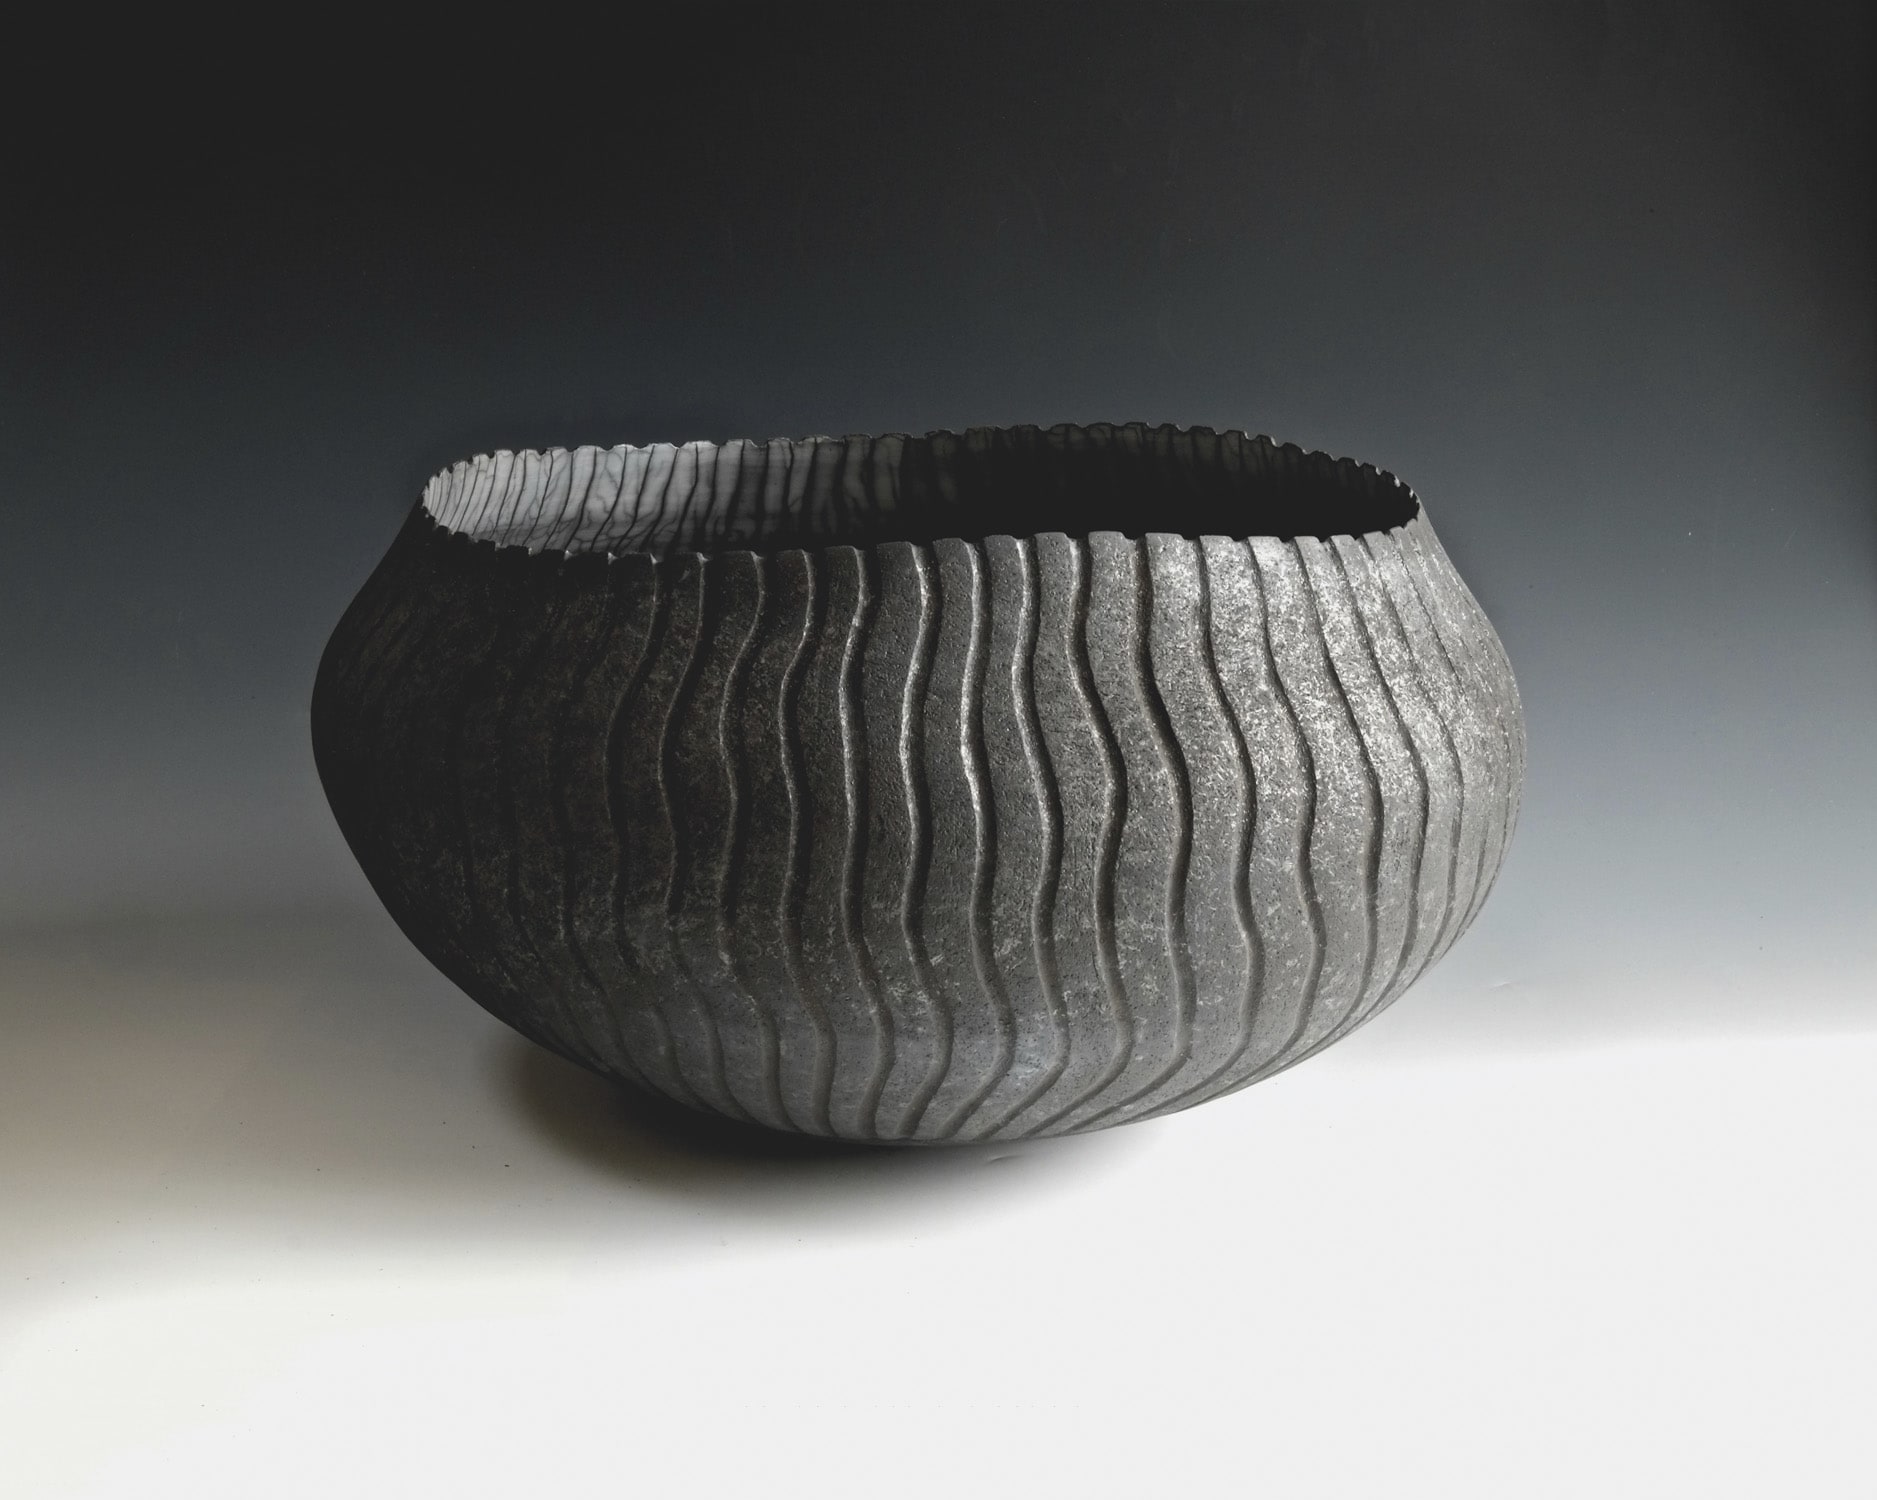 David Roberts exhibition - David Roberts work - David Roberts ceramic